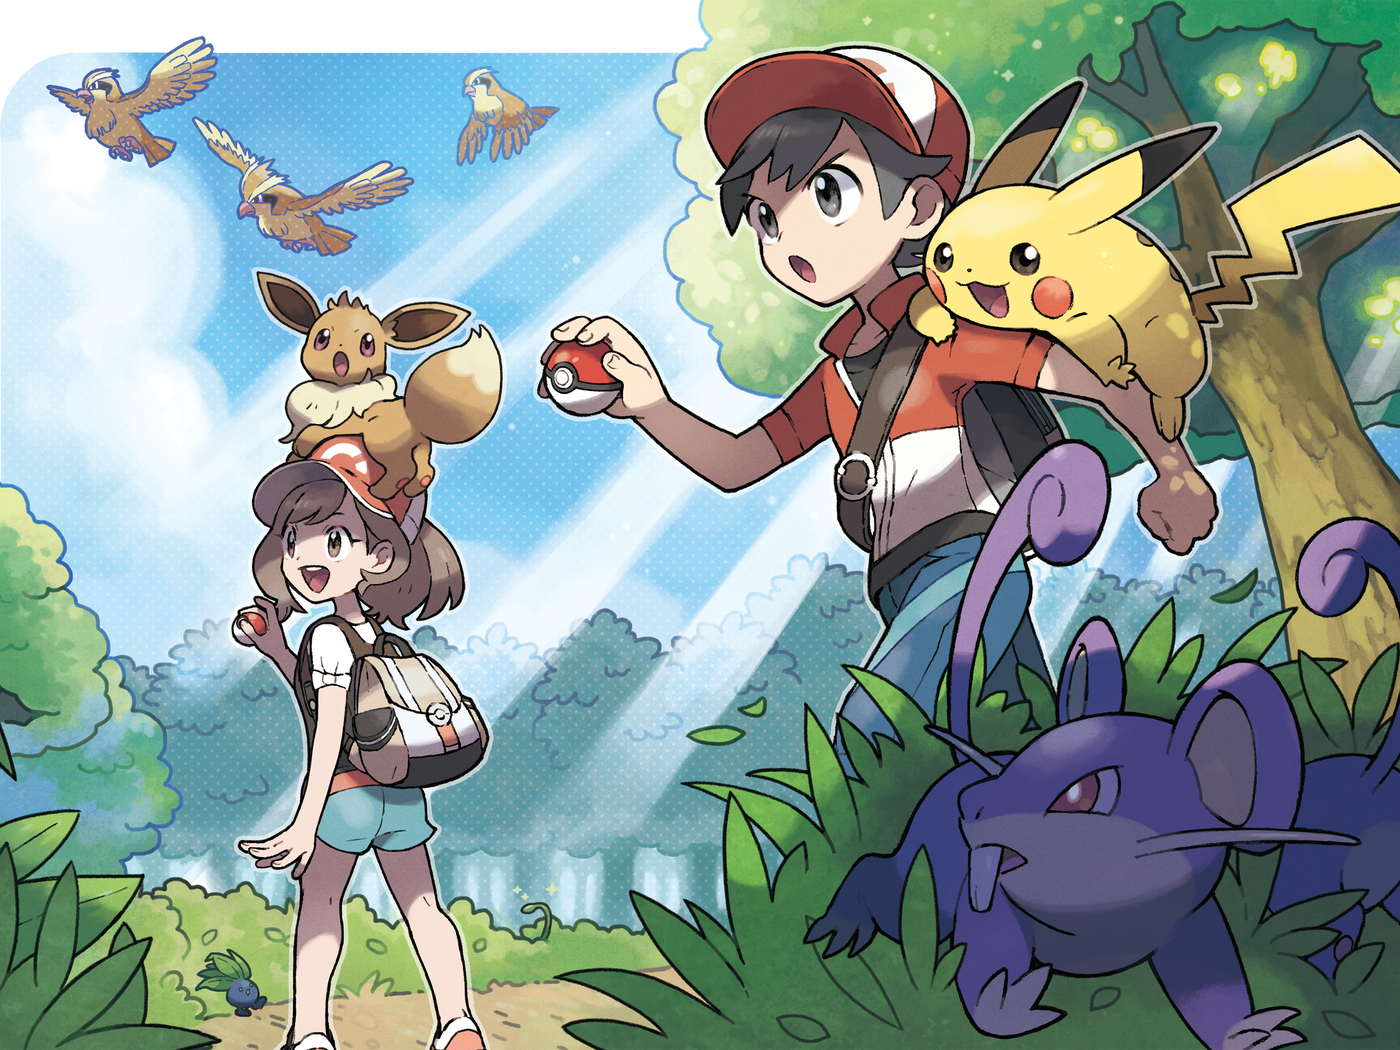 Pokémon's Kanto region gets stunning map for Pokémon: Let's Go!